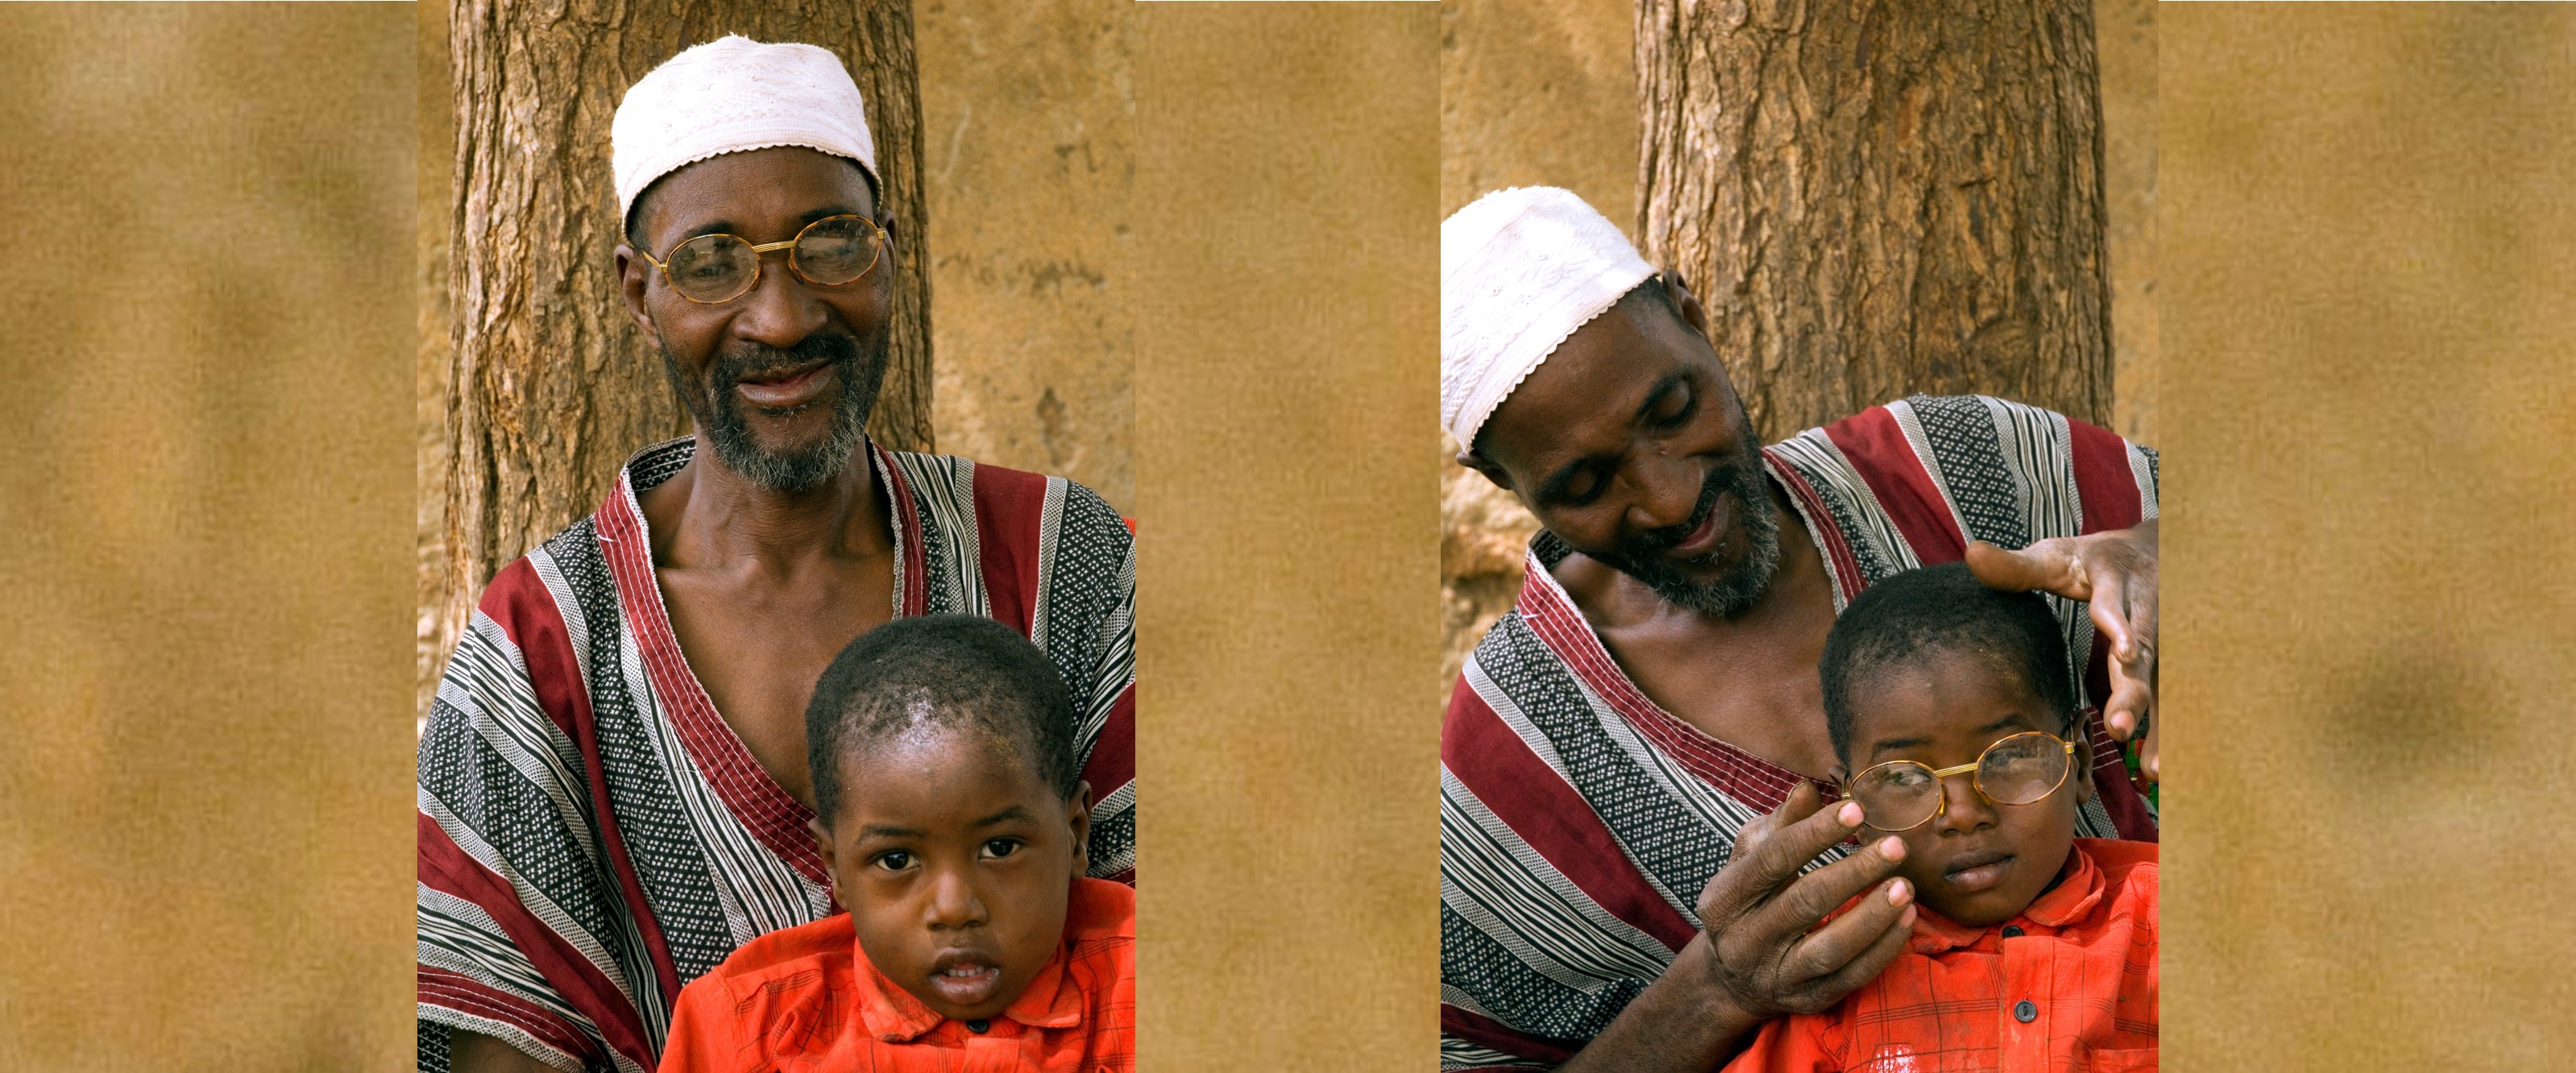 Malian man with child